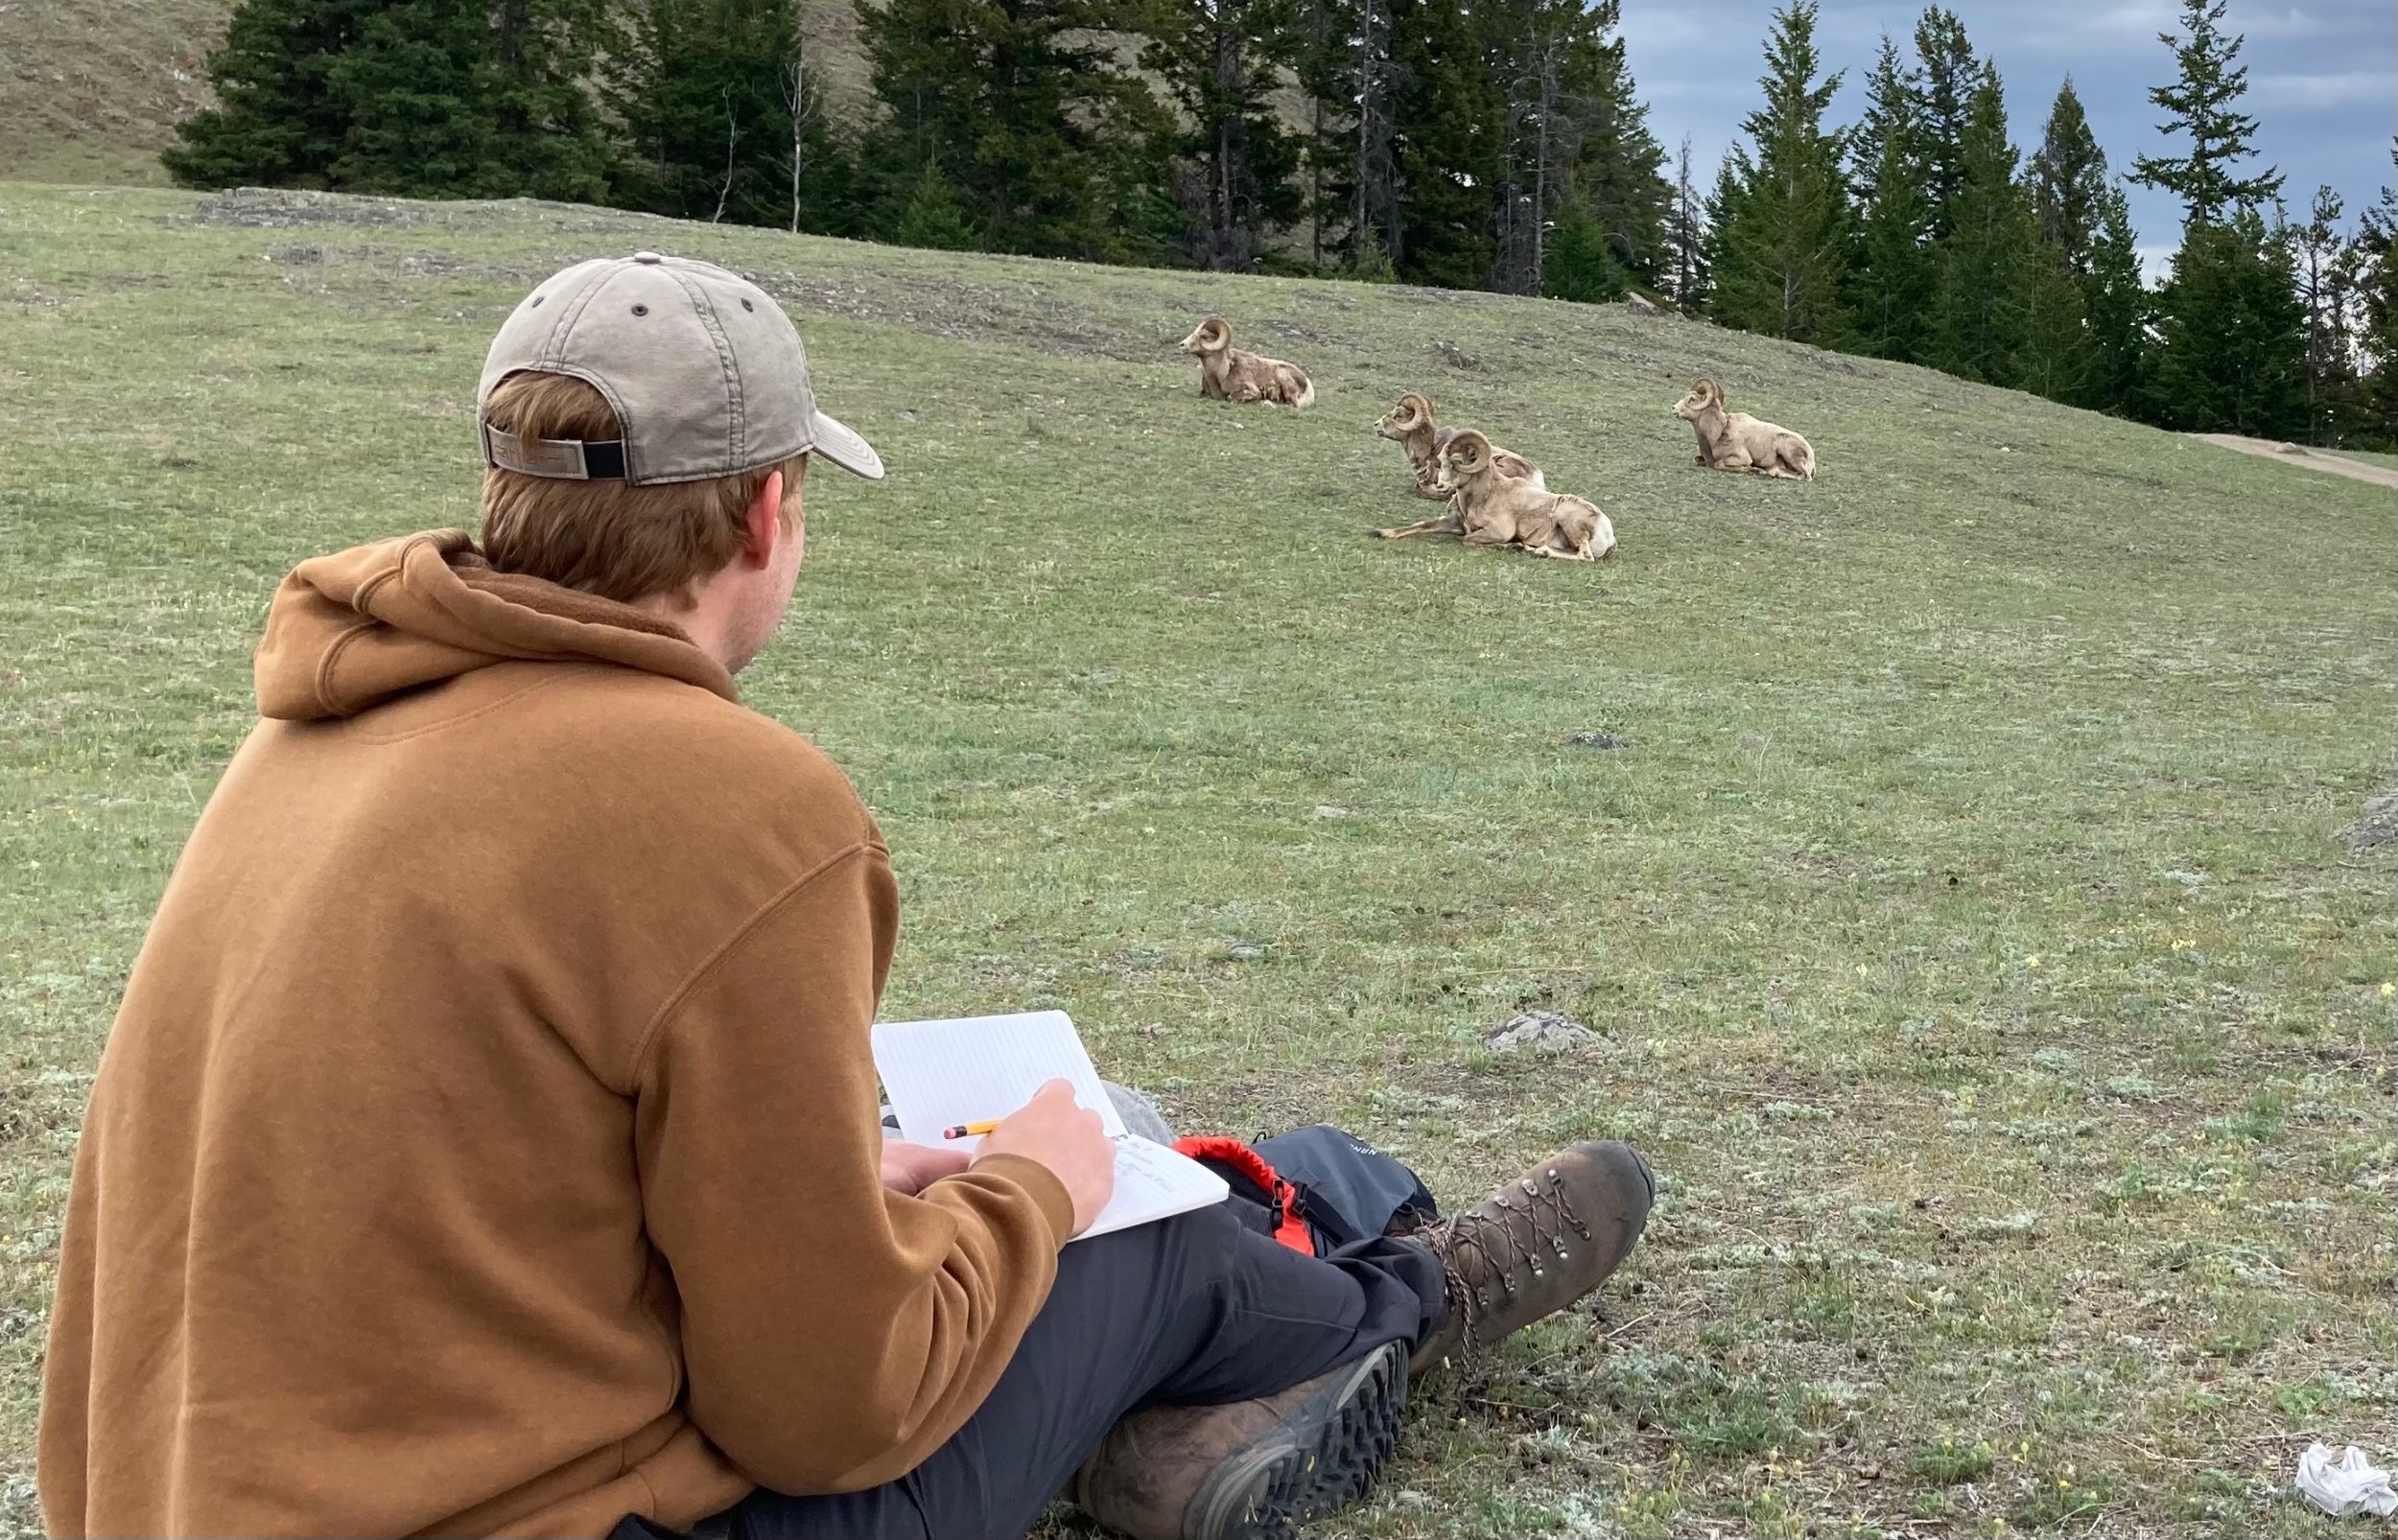 Researcher Samual Deakin observes bighorn sheep in the Ram Mountain study area in southwestern Alberta. (Photo: Supplied)